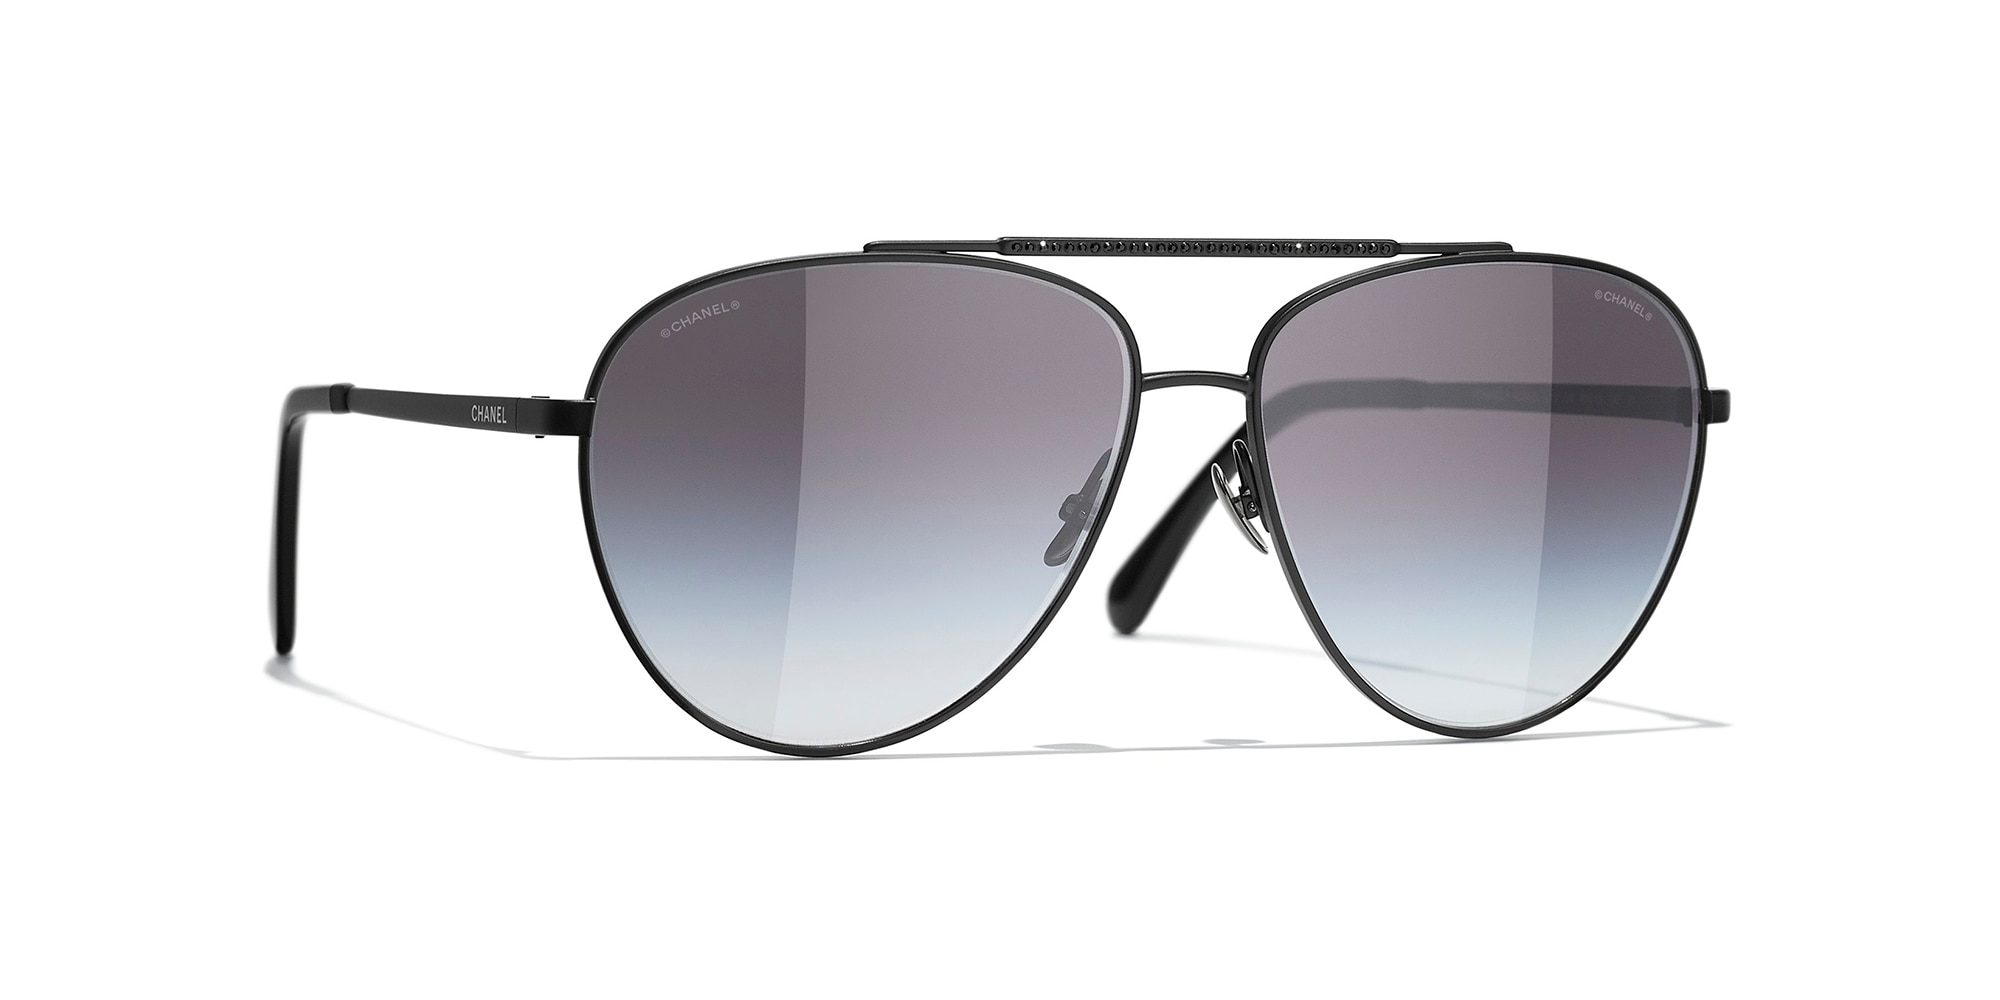 Sunglasses Pilot Sunglasses acetate  strass  Fashion  CHANEL